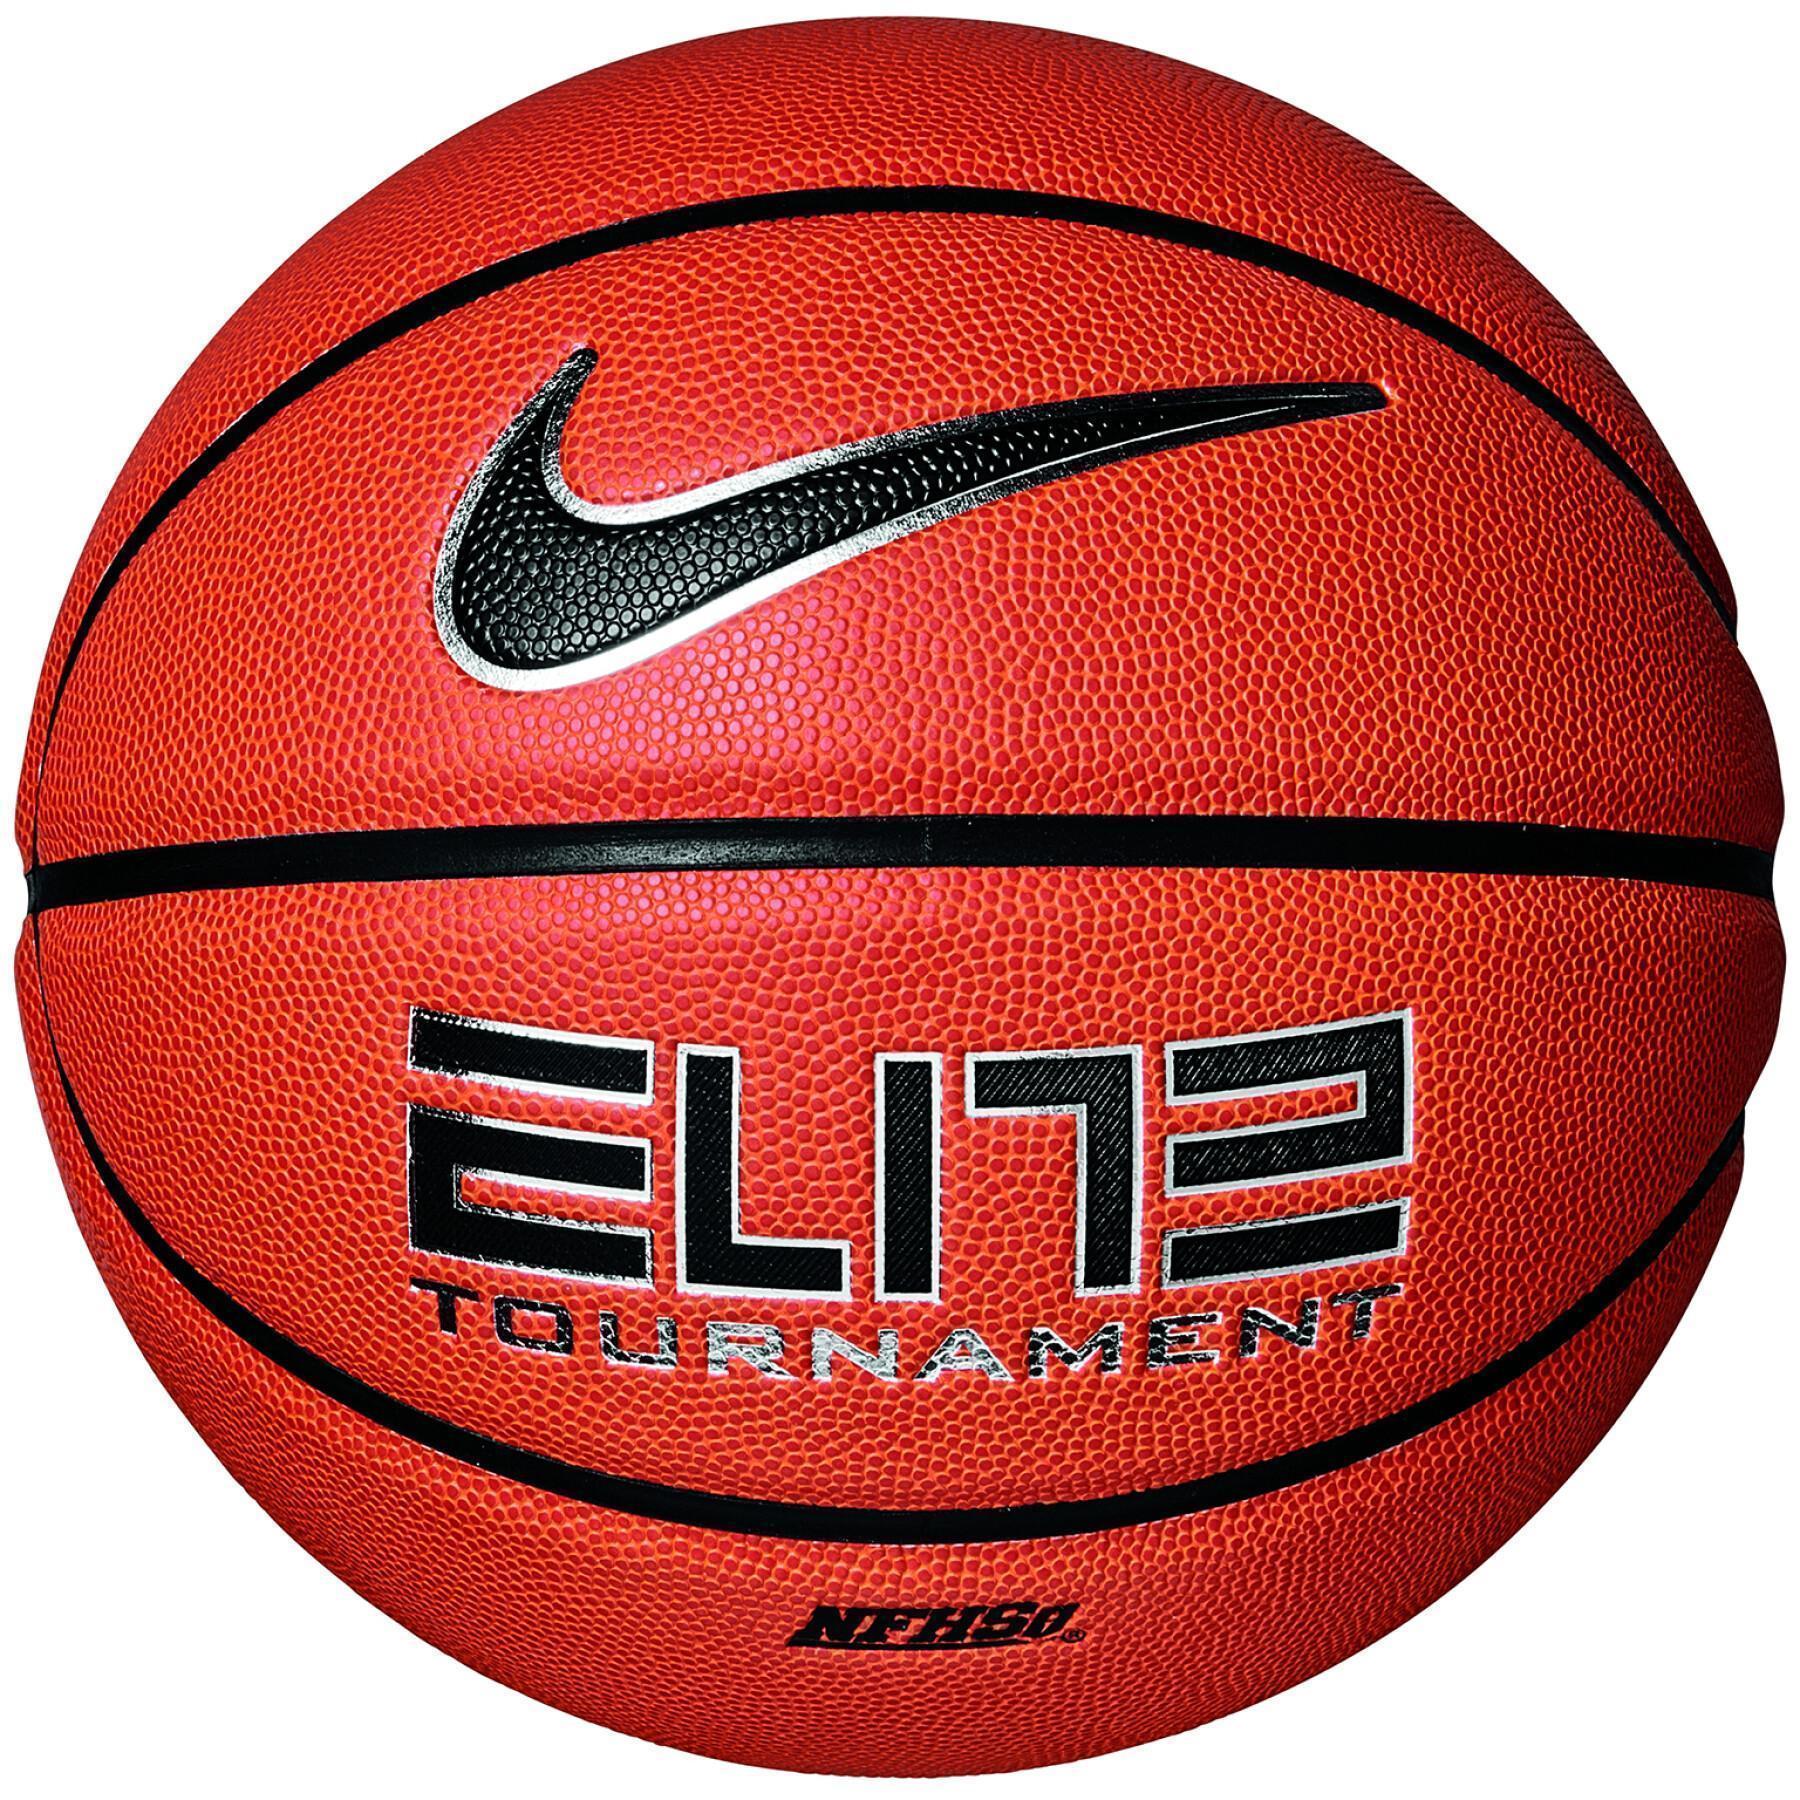 Pallone Nike elite tournament 8p